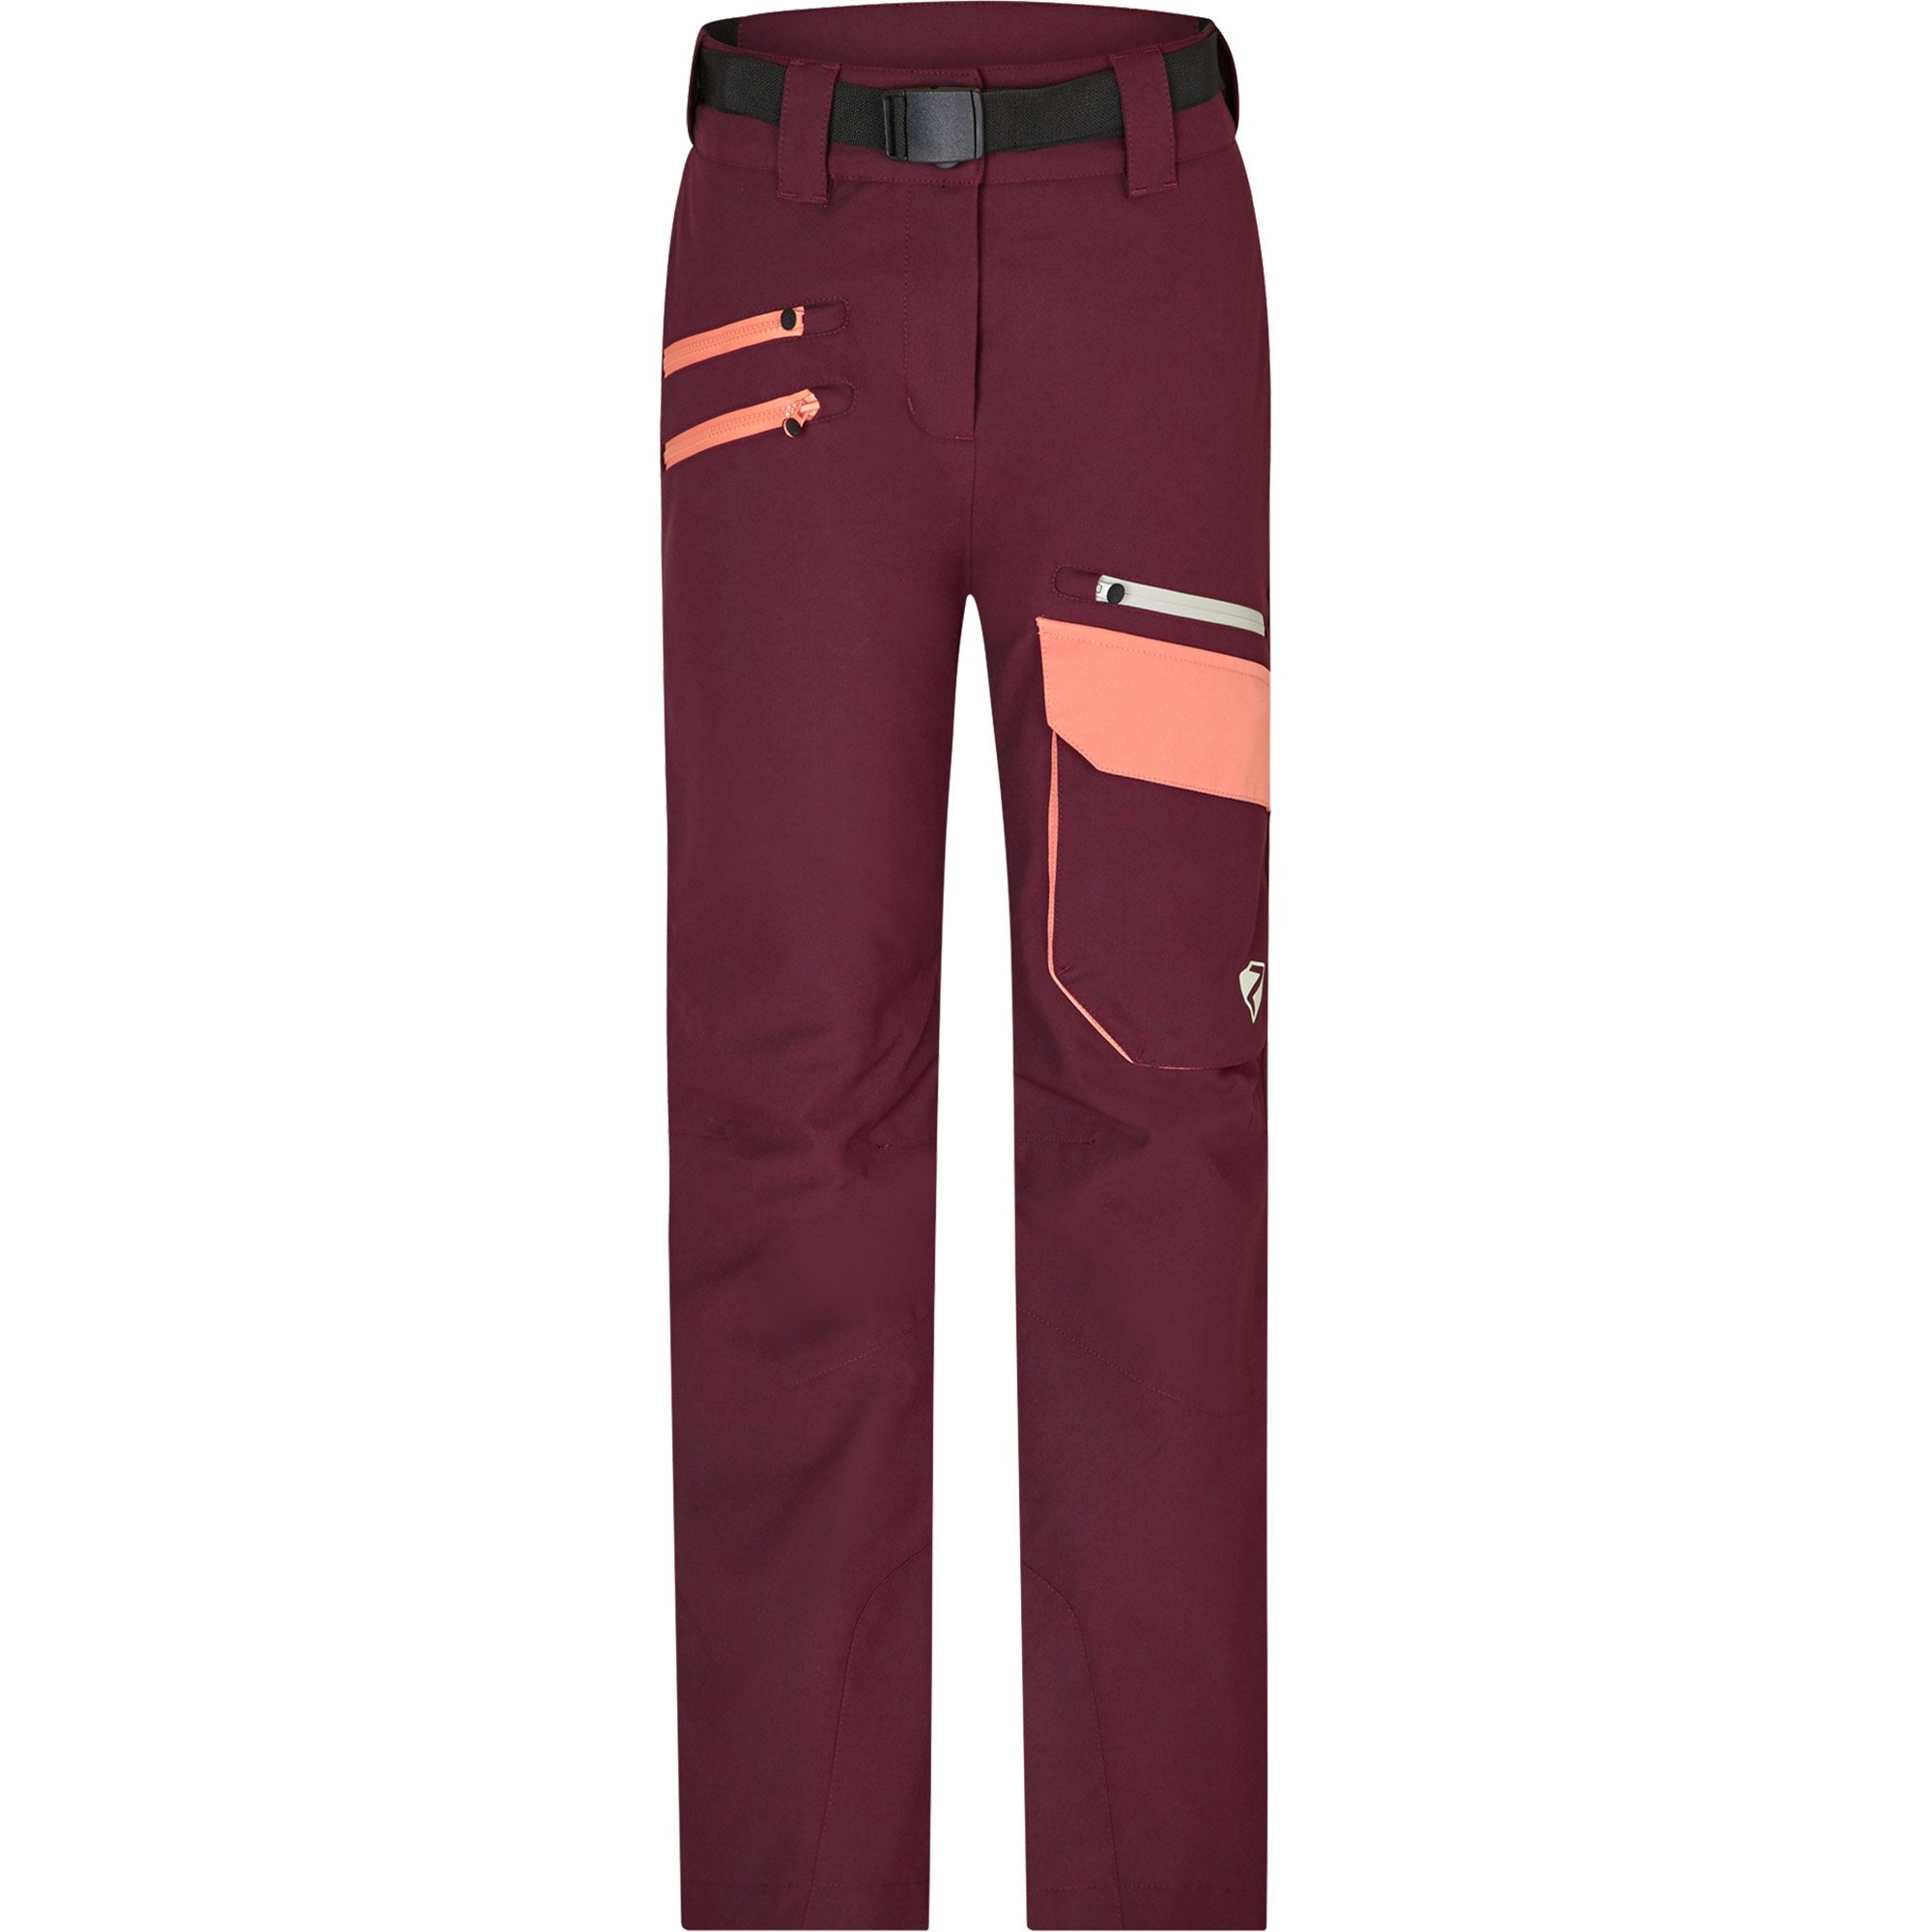 Ziener - Aileen Junior Ski Pants Girls velvet red at Sport Bittl Shop